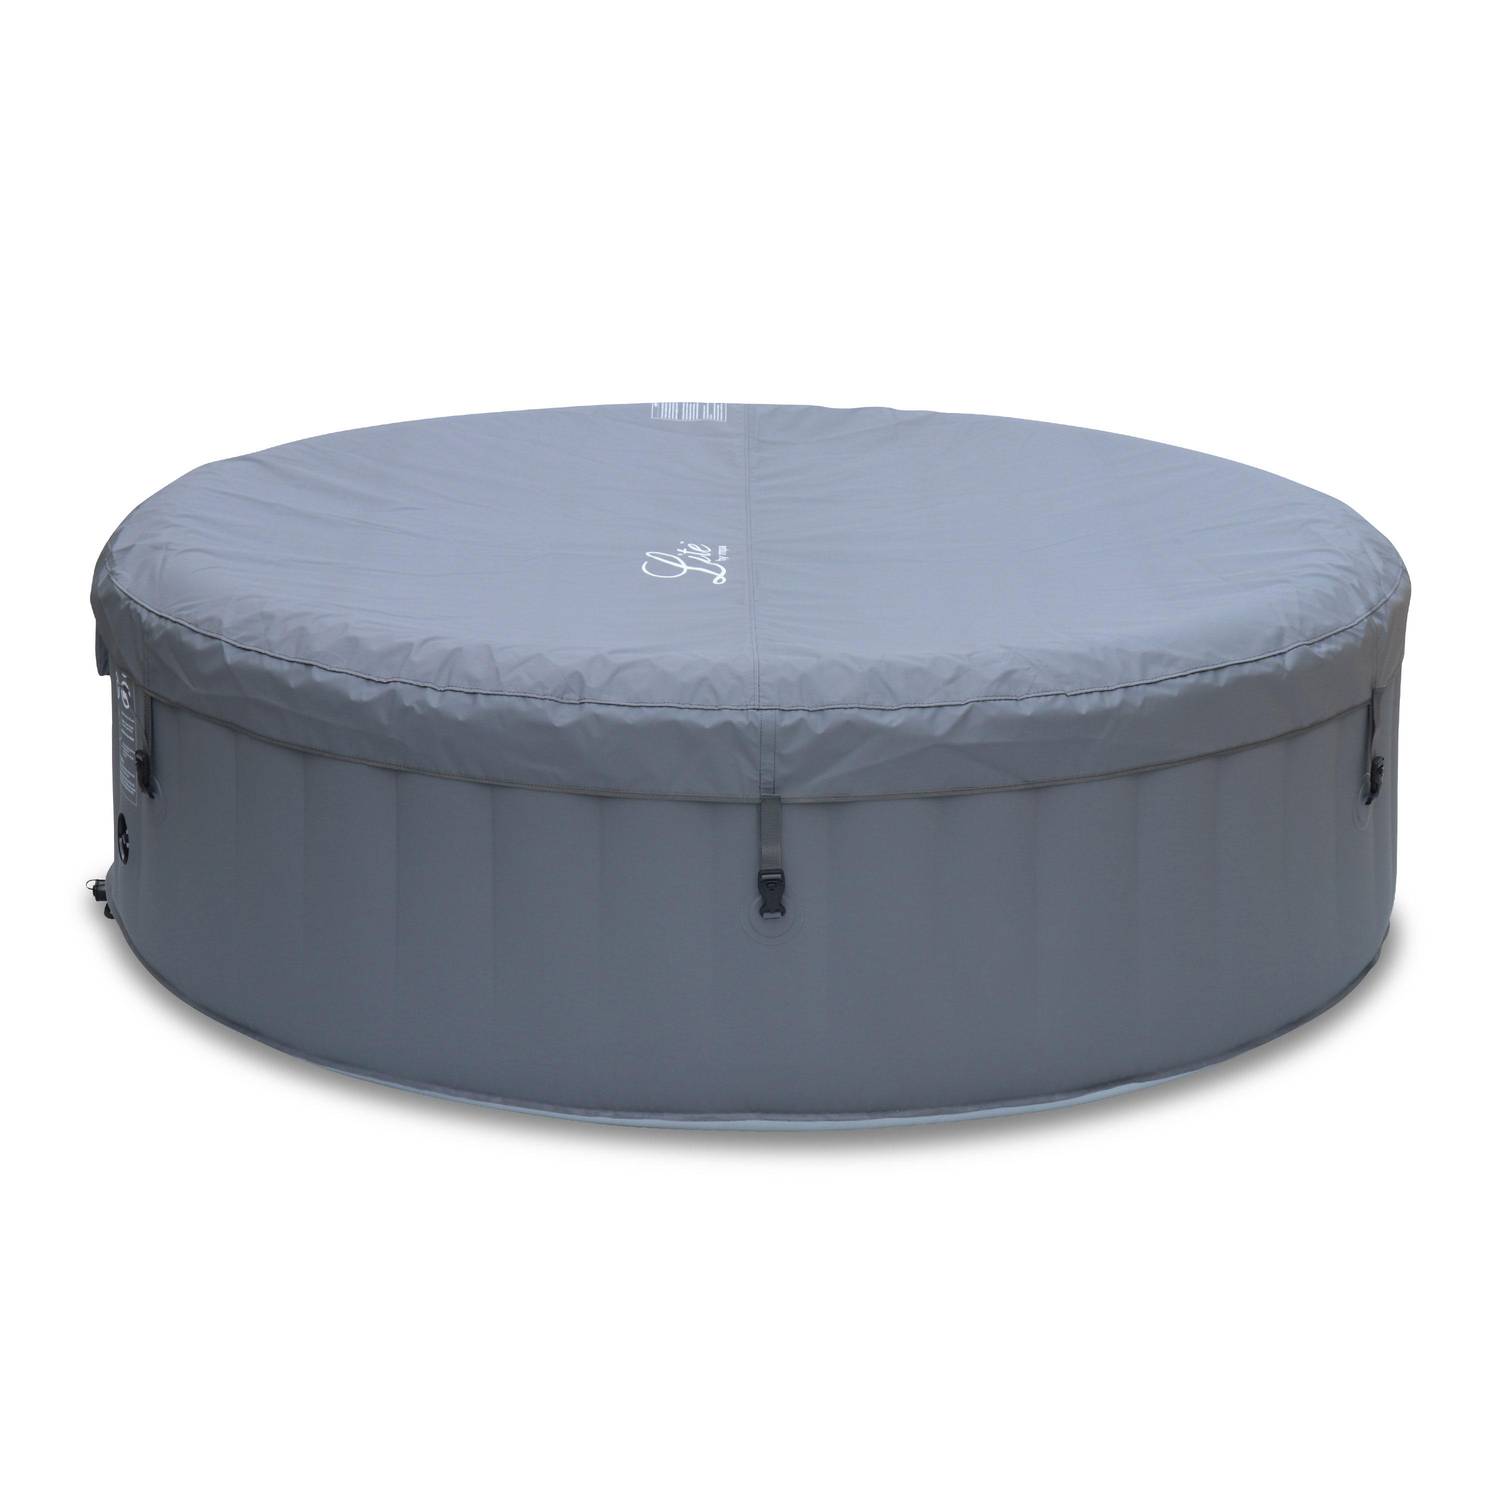  6-person round inflatable hot tub MSpa - Ø205cm round 6-person spa, PVC, pump, heater, filter, remote control - Kili 6 - Grey Photo2